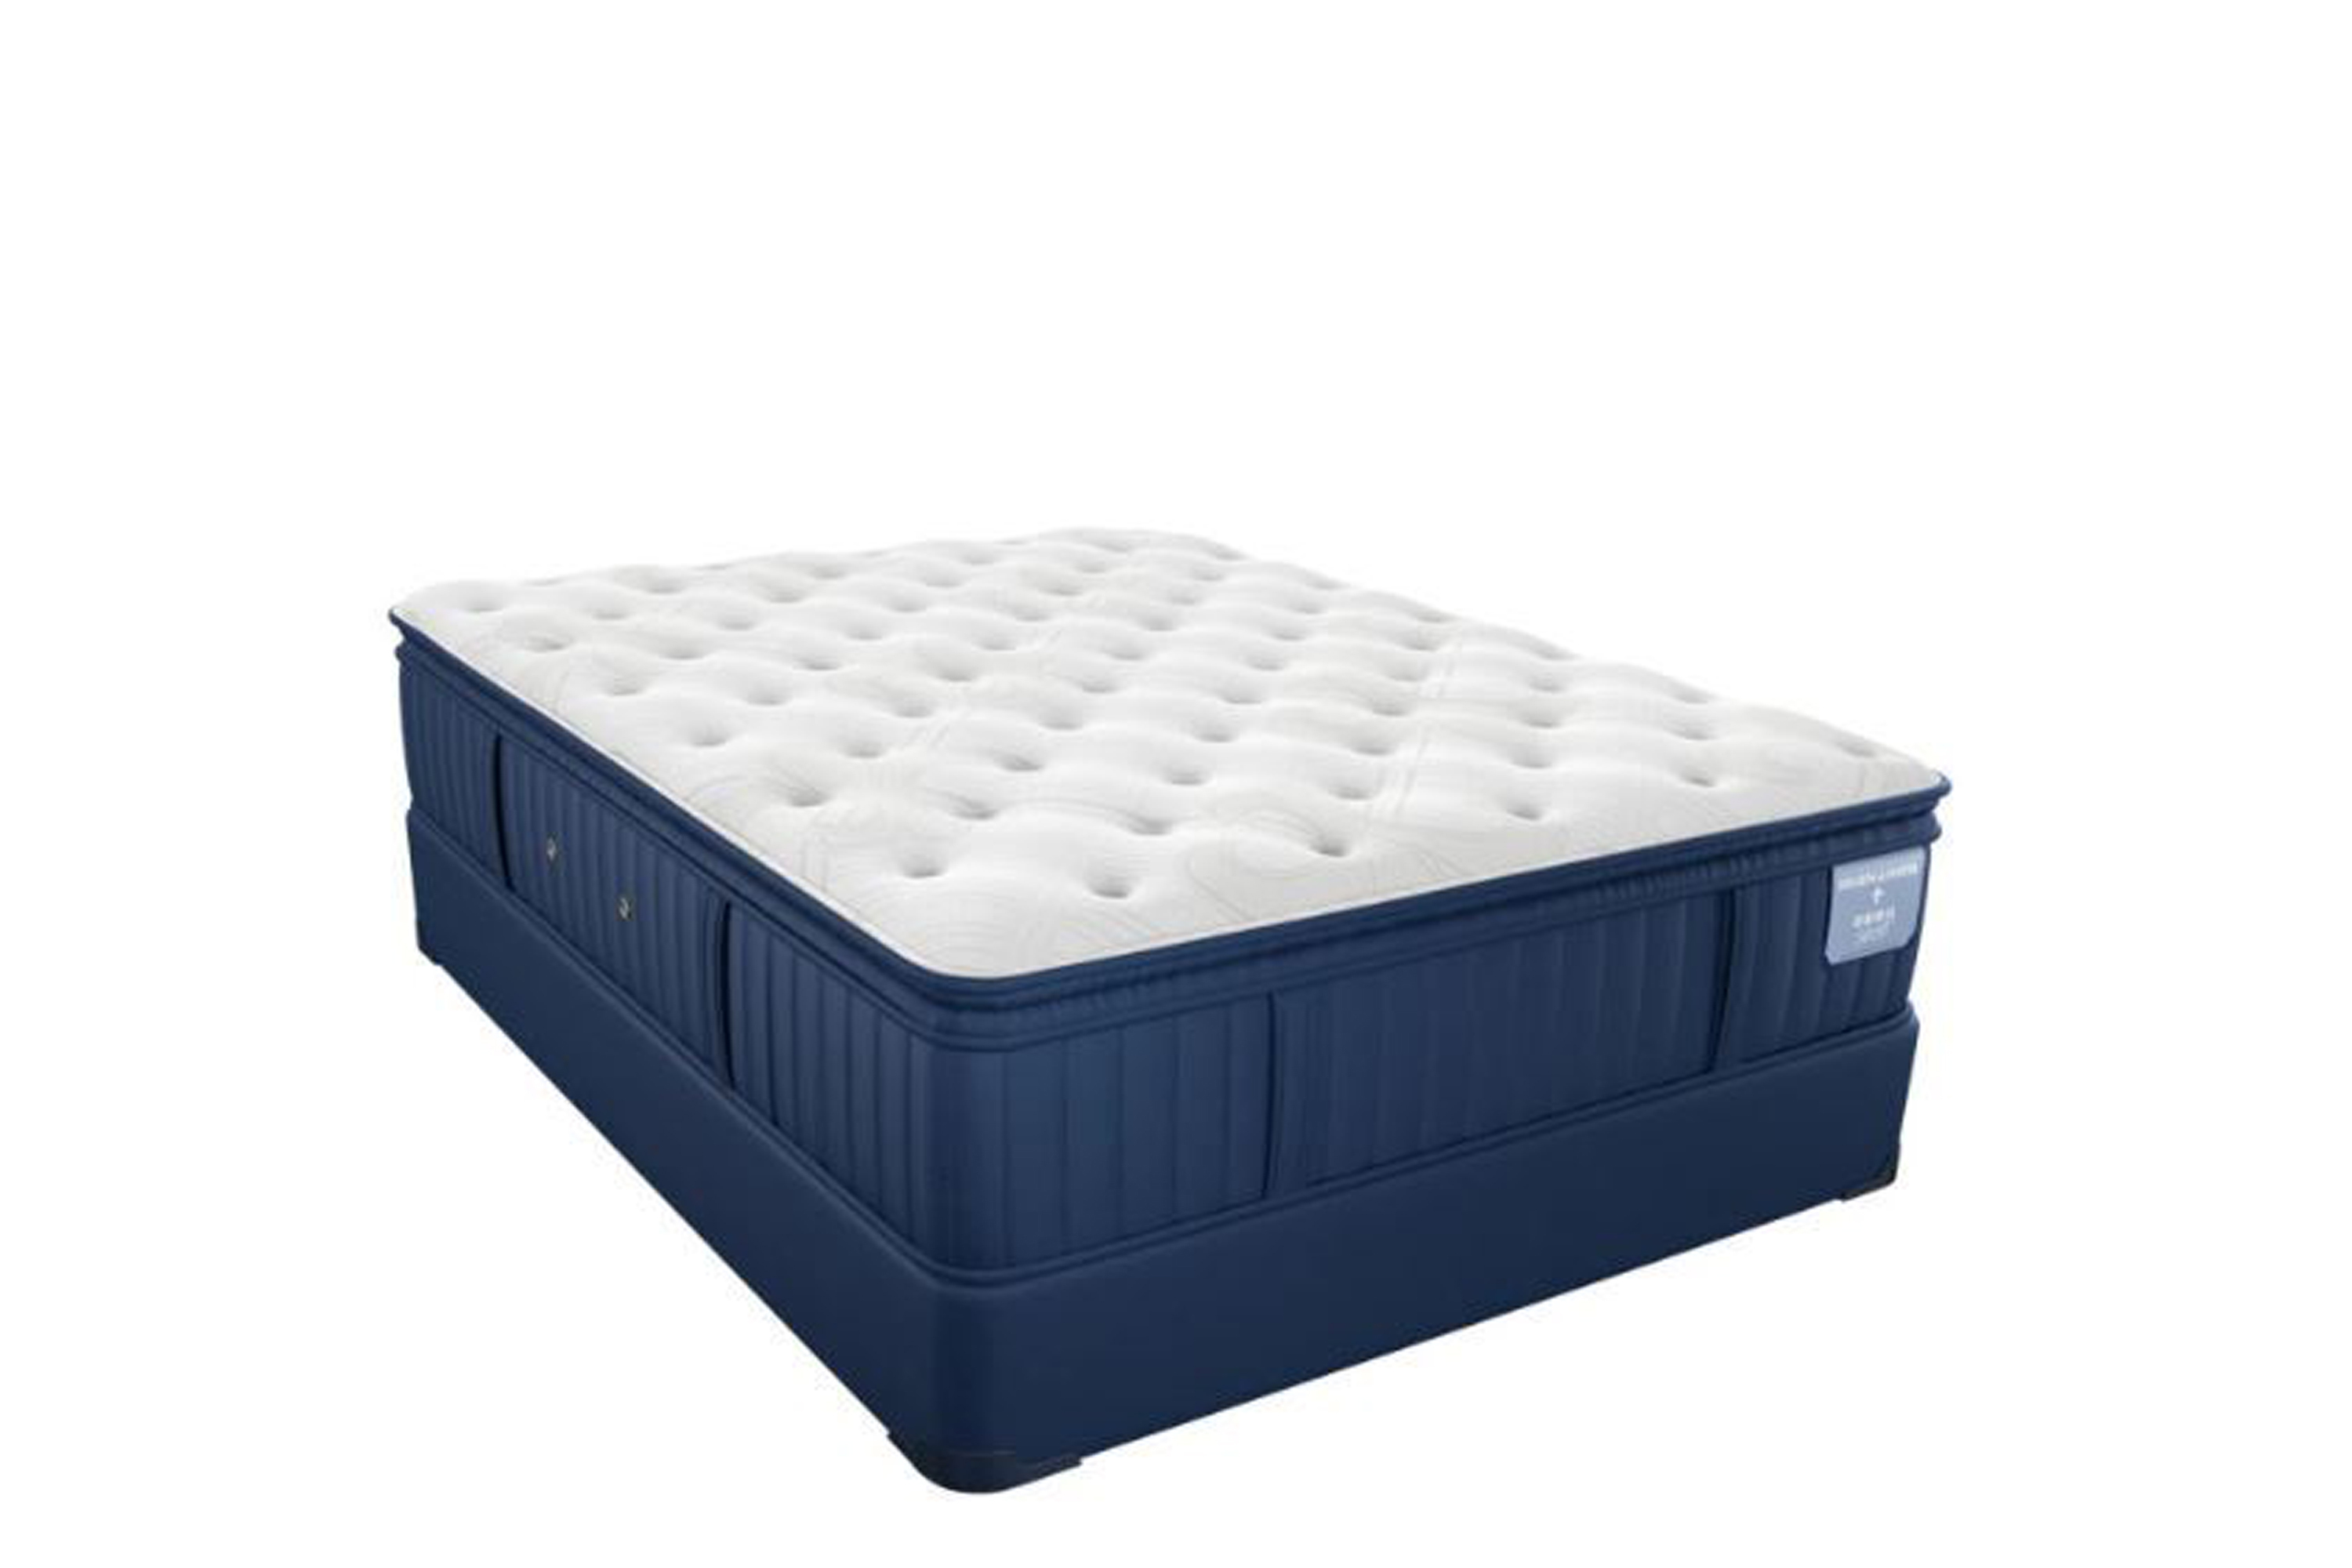 A blue pillowtop mattress providing comfort & support for a good sleep experience.